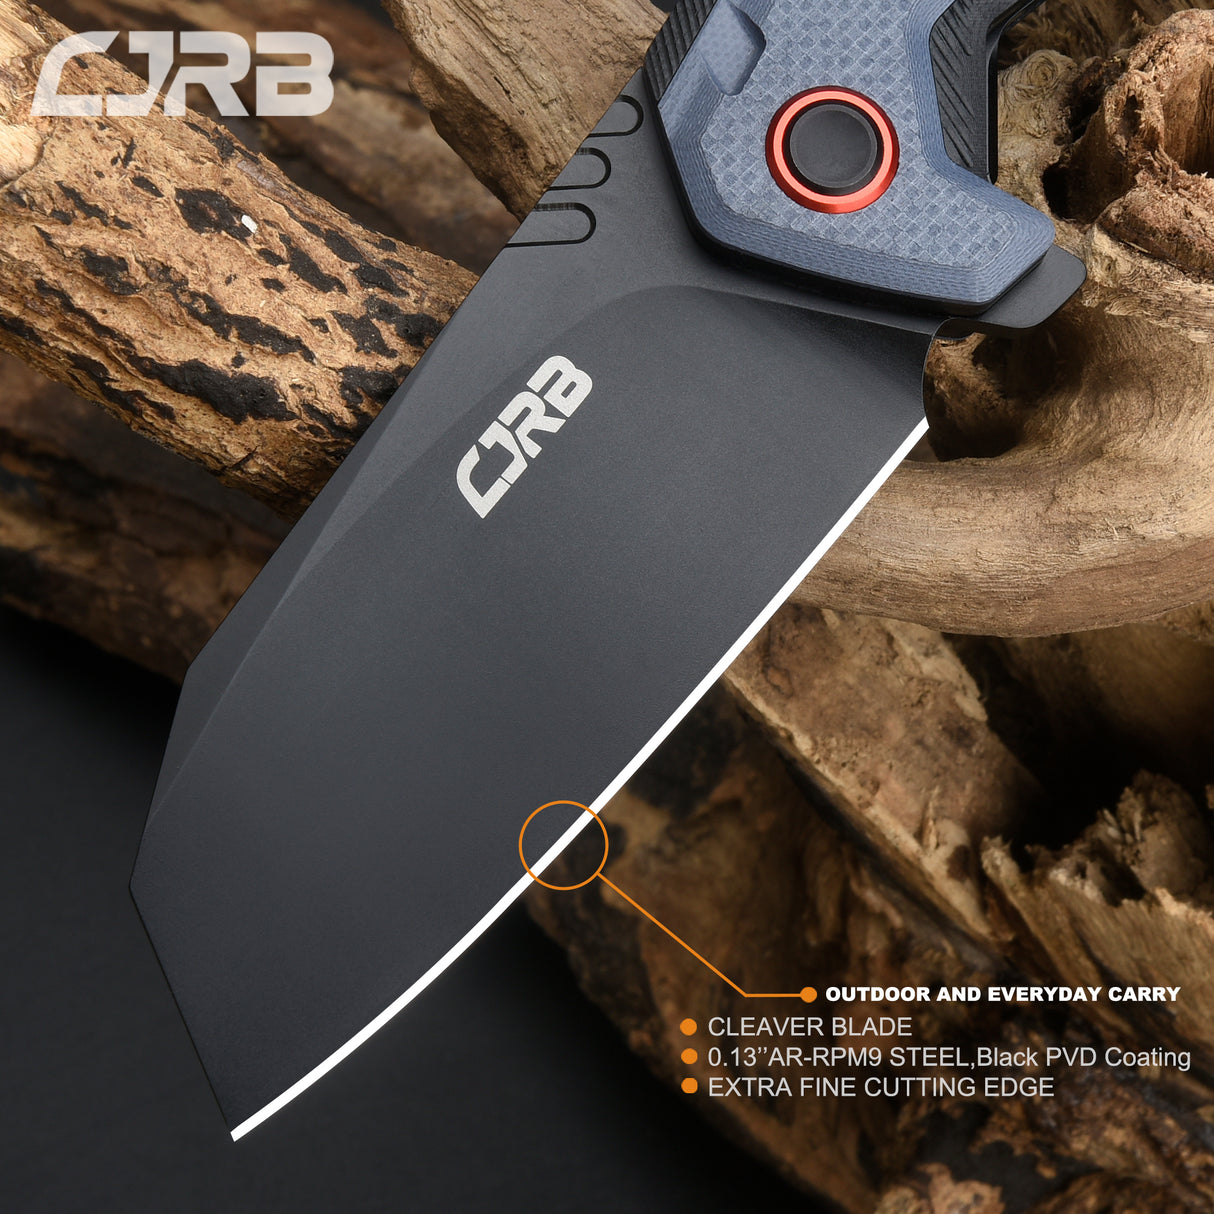 CJRB TIGRIS J1919 AR-RPM9 Powder Steel Black PVD Blade Black&Blue G10 Handle Pocket Knife Folding Knife EDC Knife